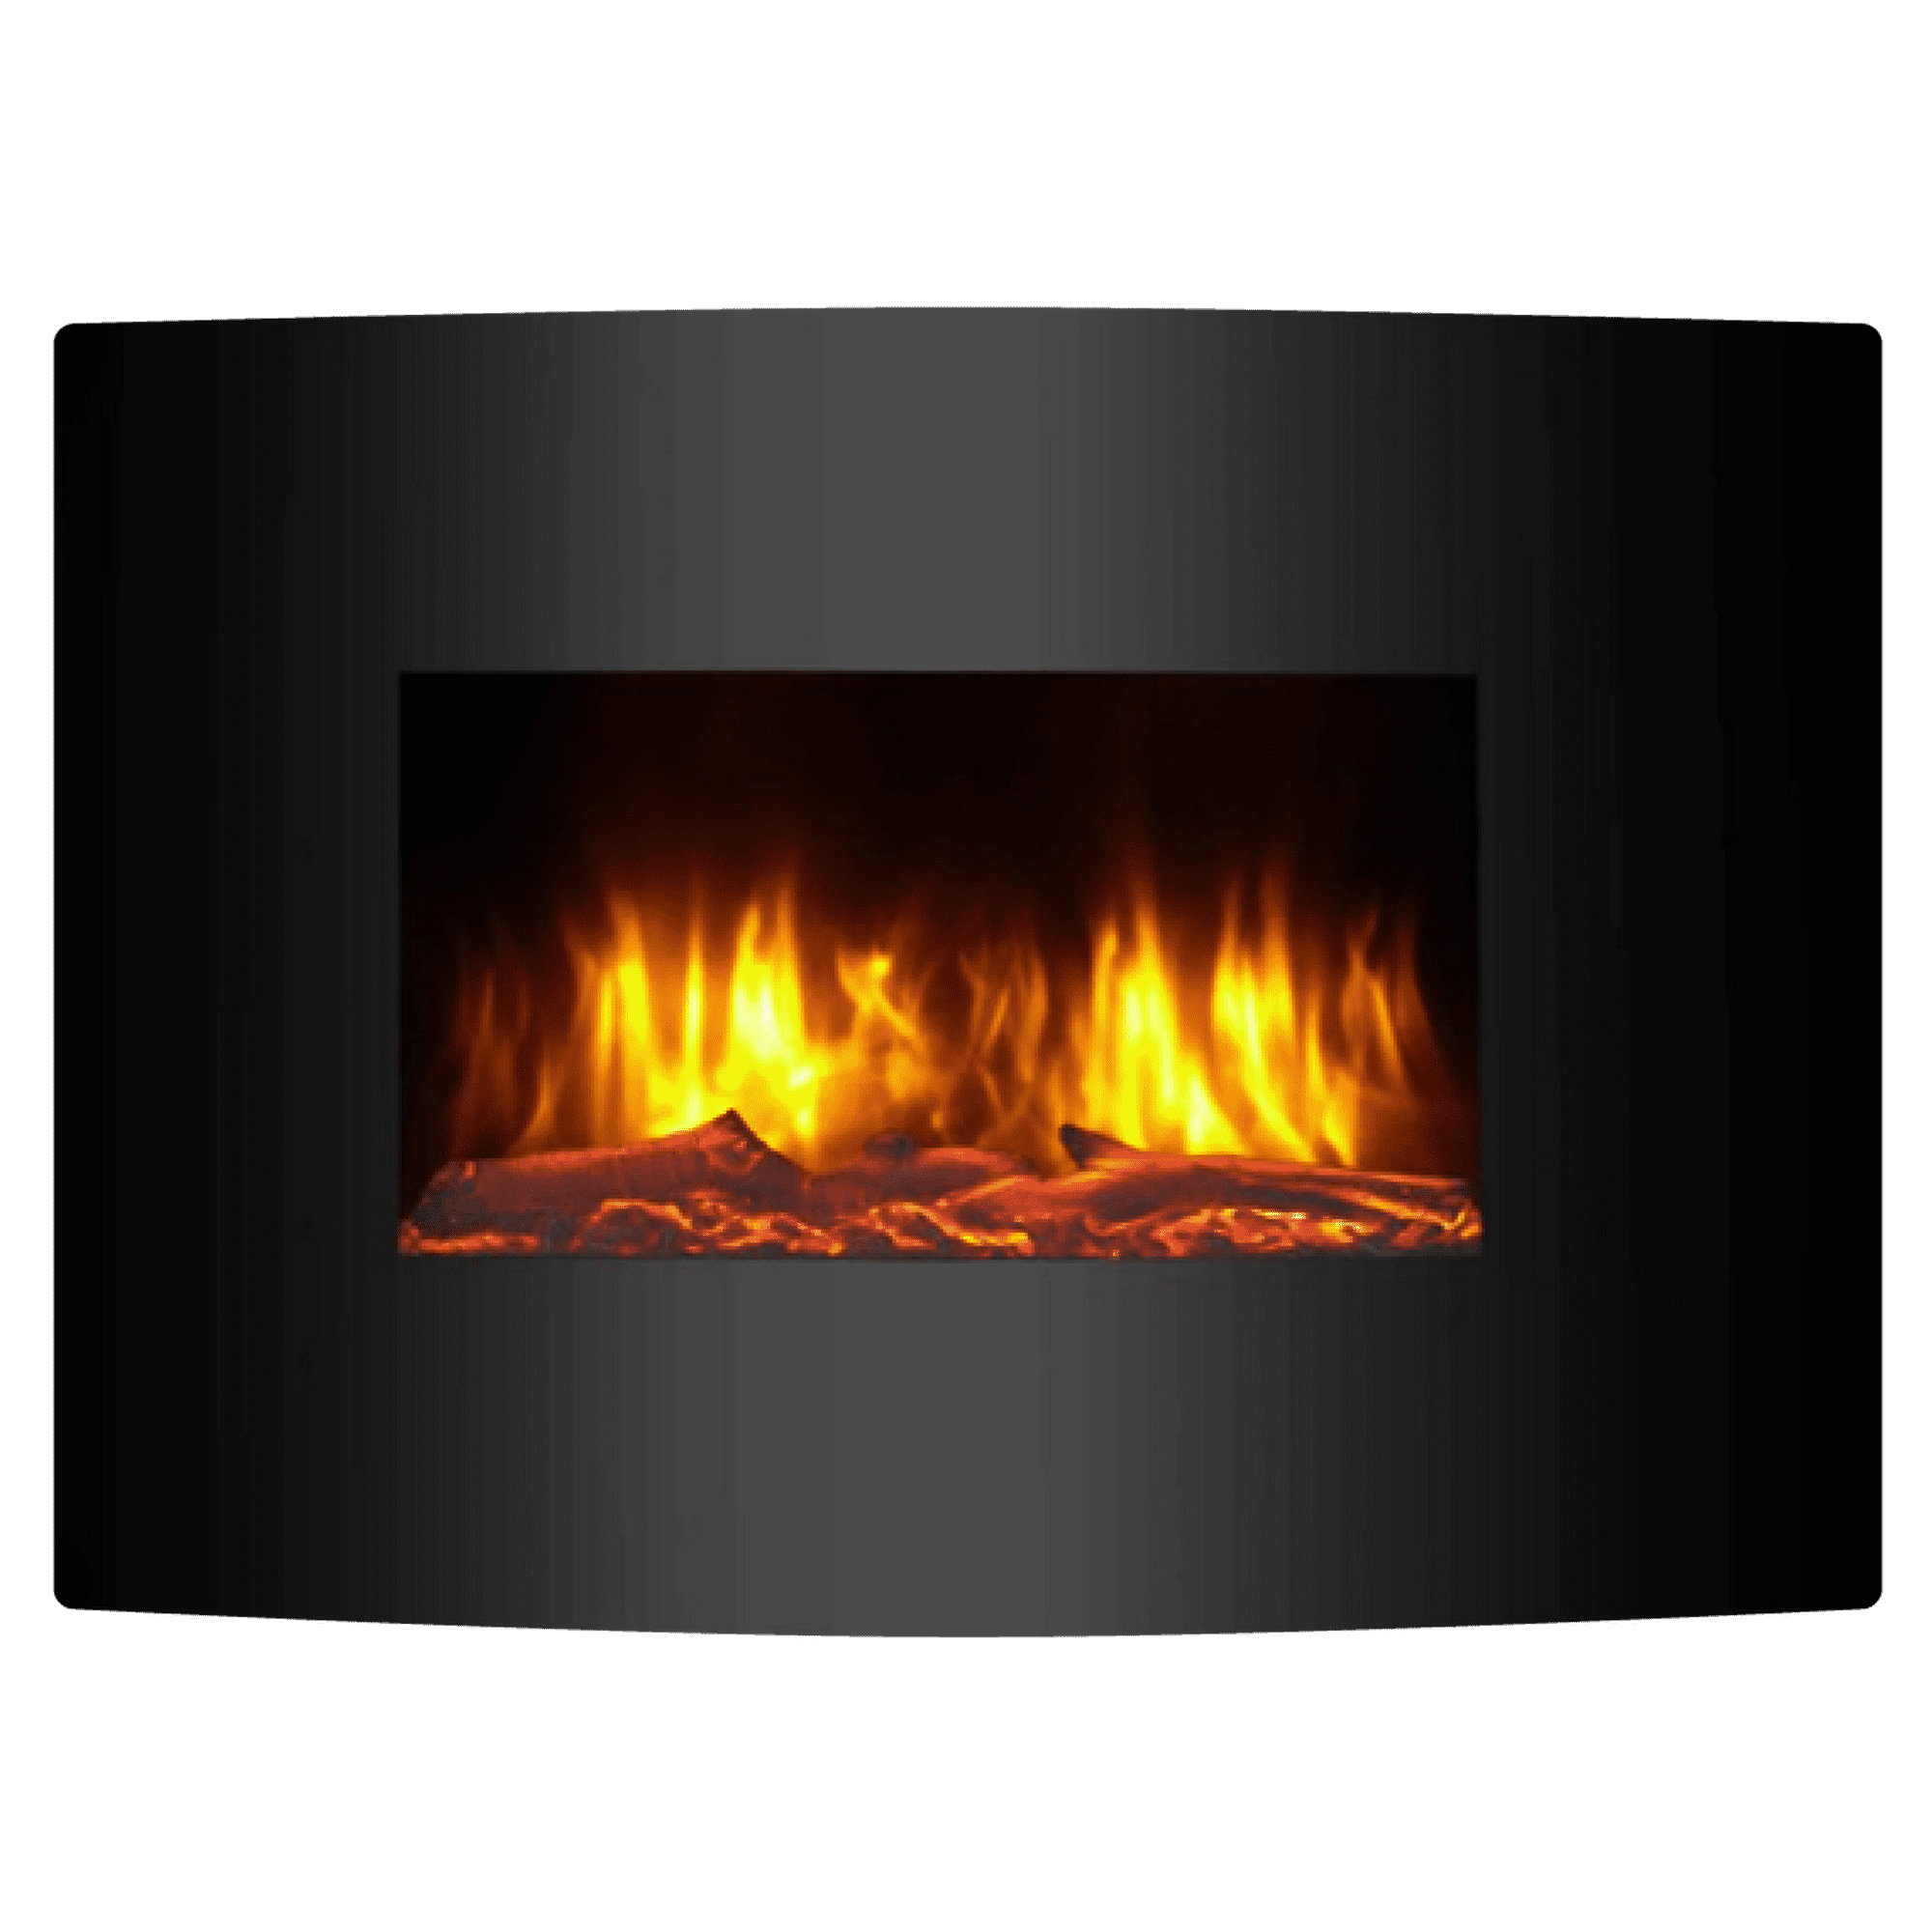 Fauna decorativa: Chimenea de exterior / Outdoor fireplace  Chimeneas  exteriores, Sala de exterior, Salas de estar al aire libre